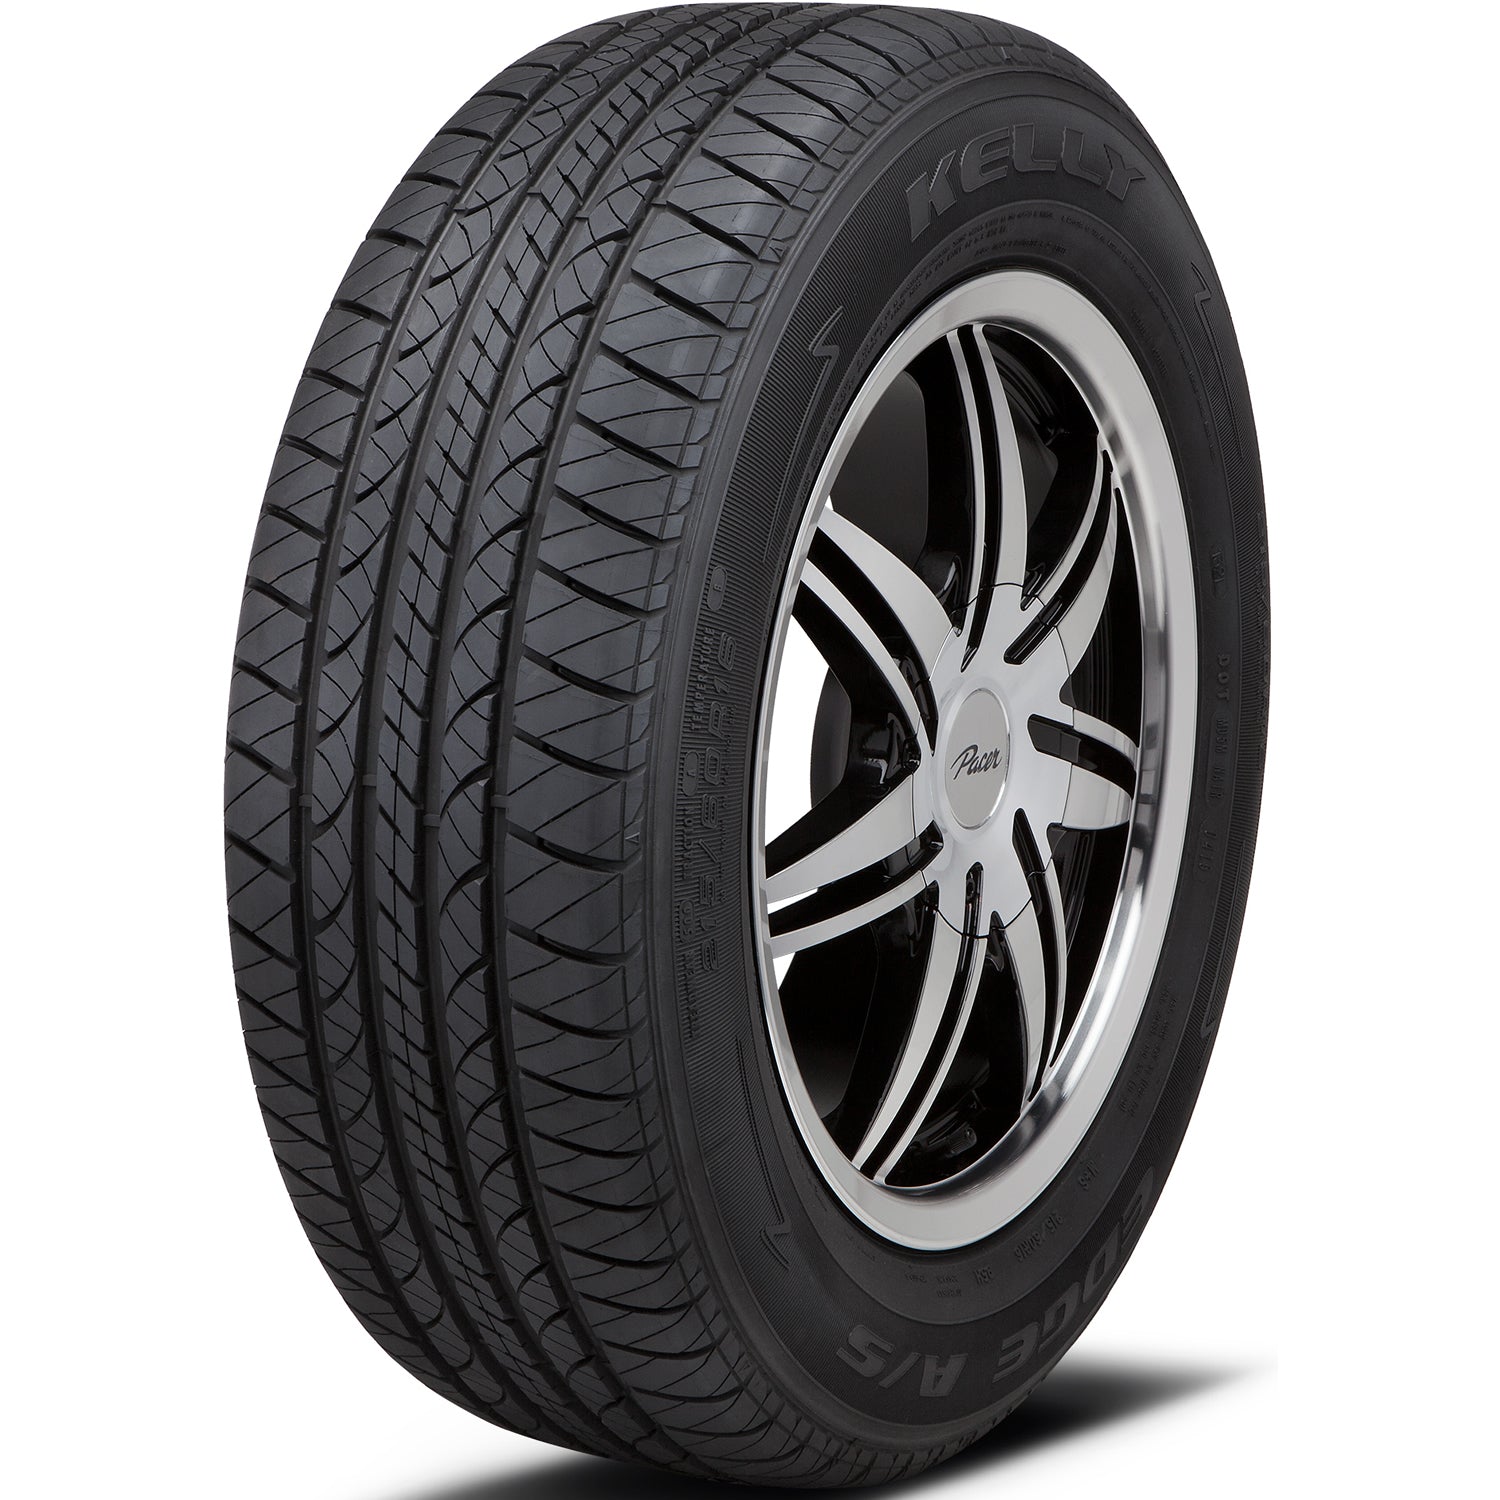 KELLY EDGE AS 235/70R16 (29X9.5R 16) Tires